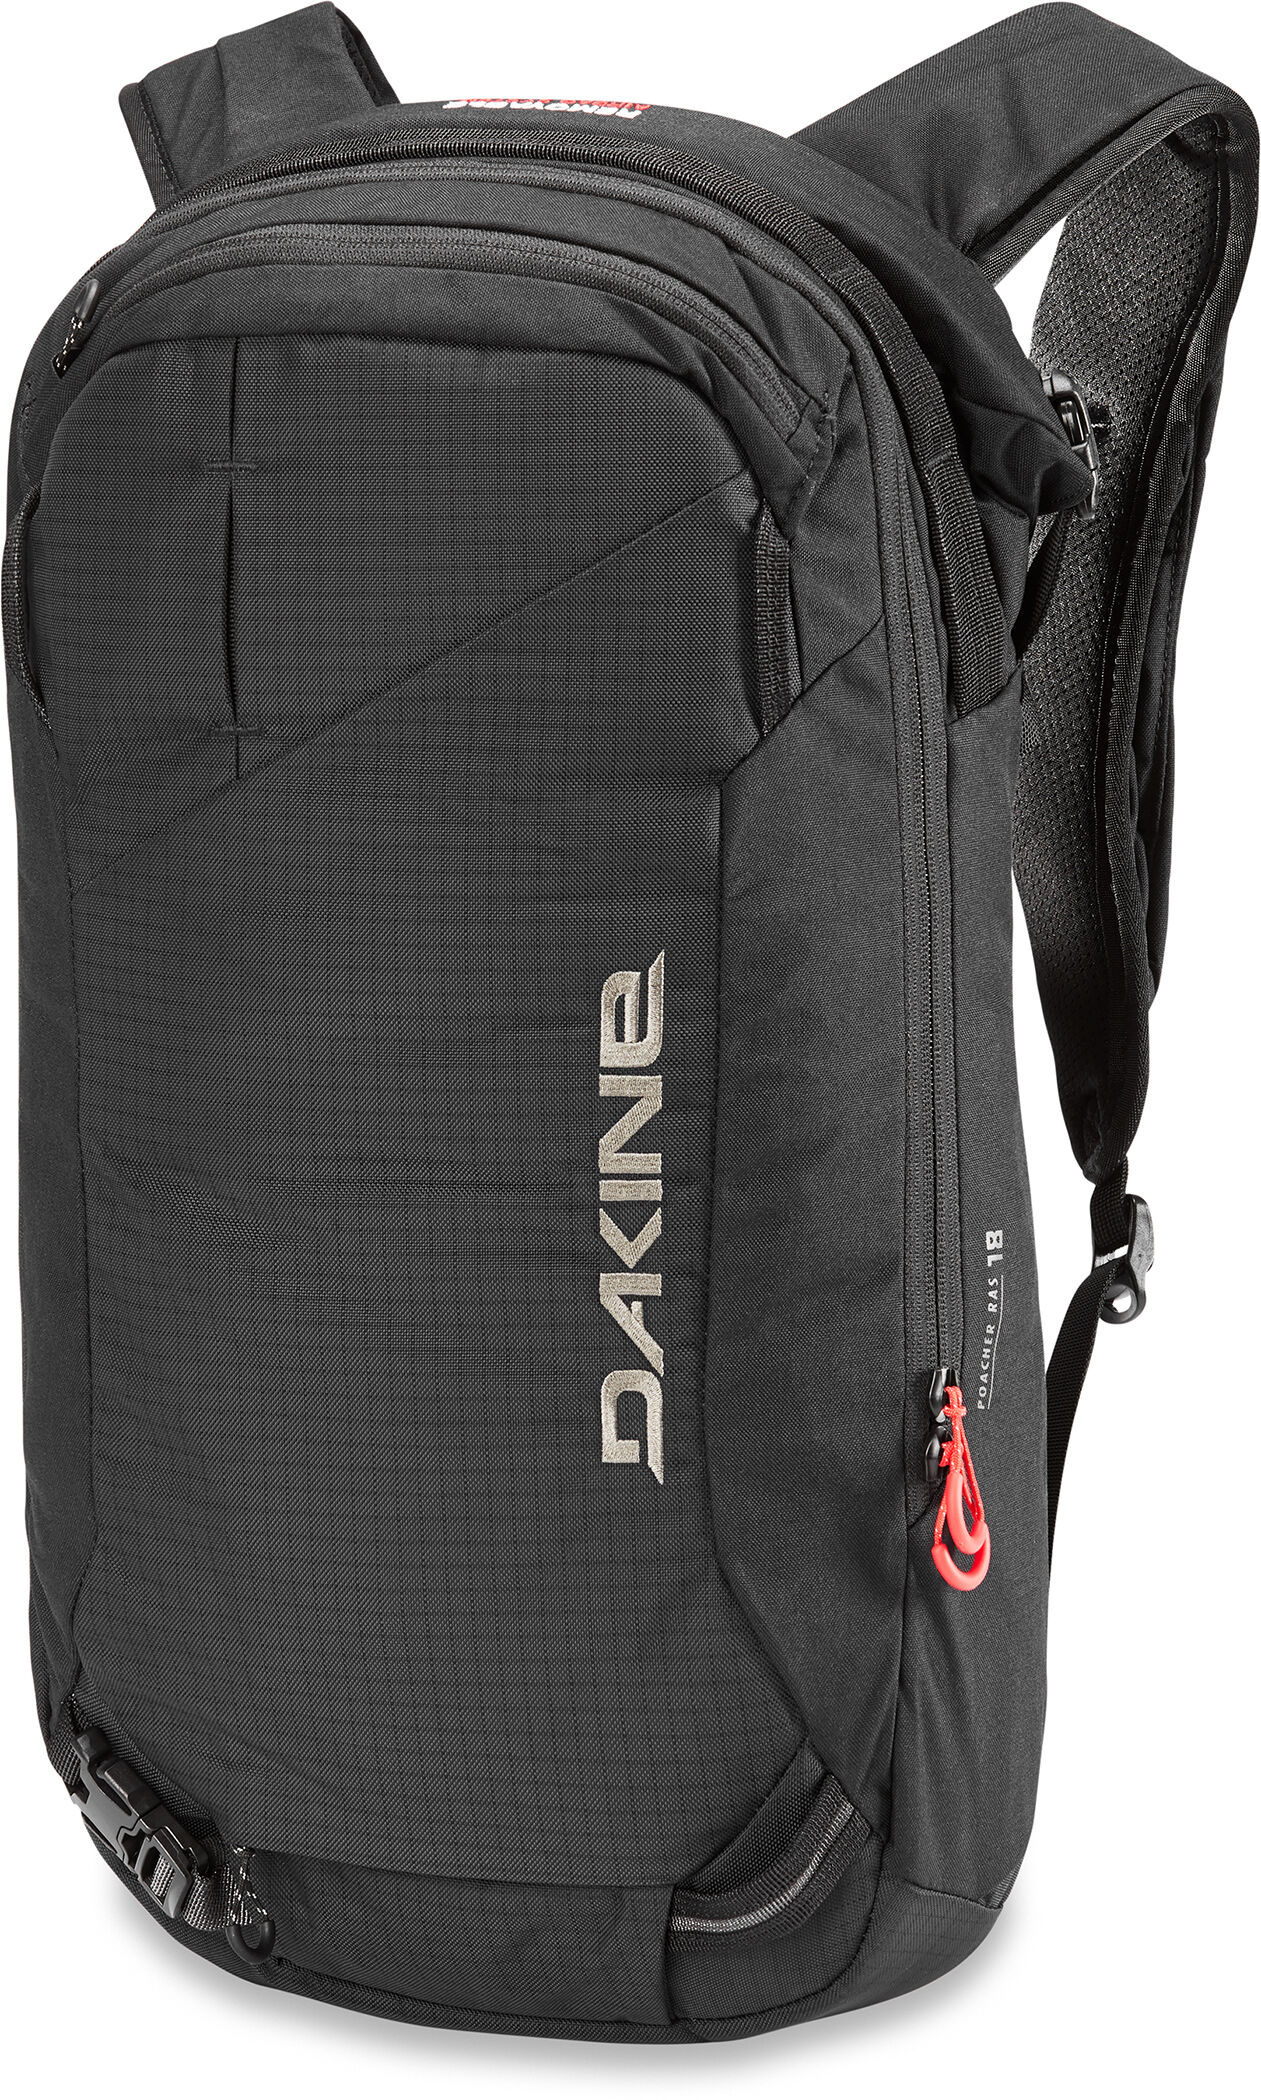 Dakine Poacher Ras 18L - Ski Touring backpack